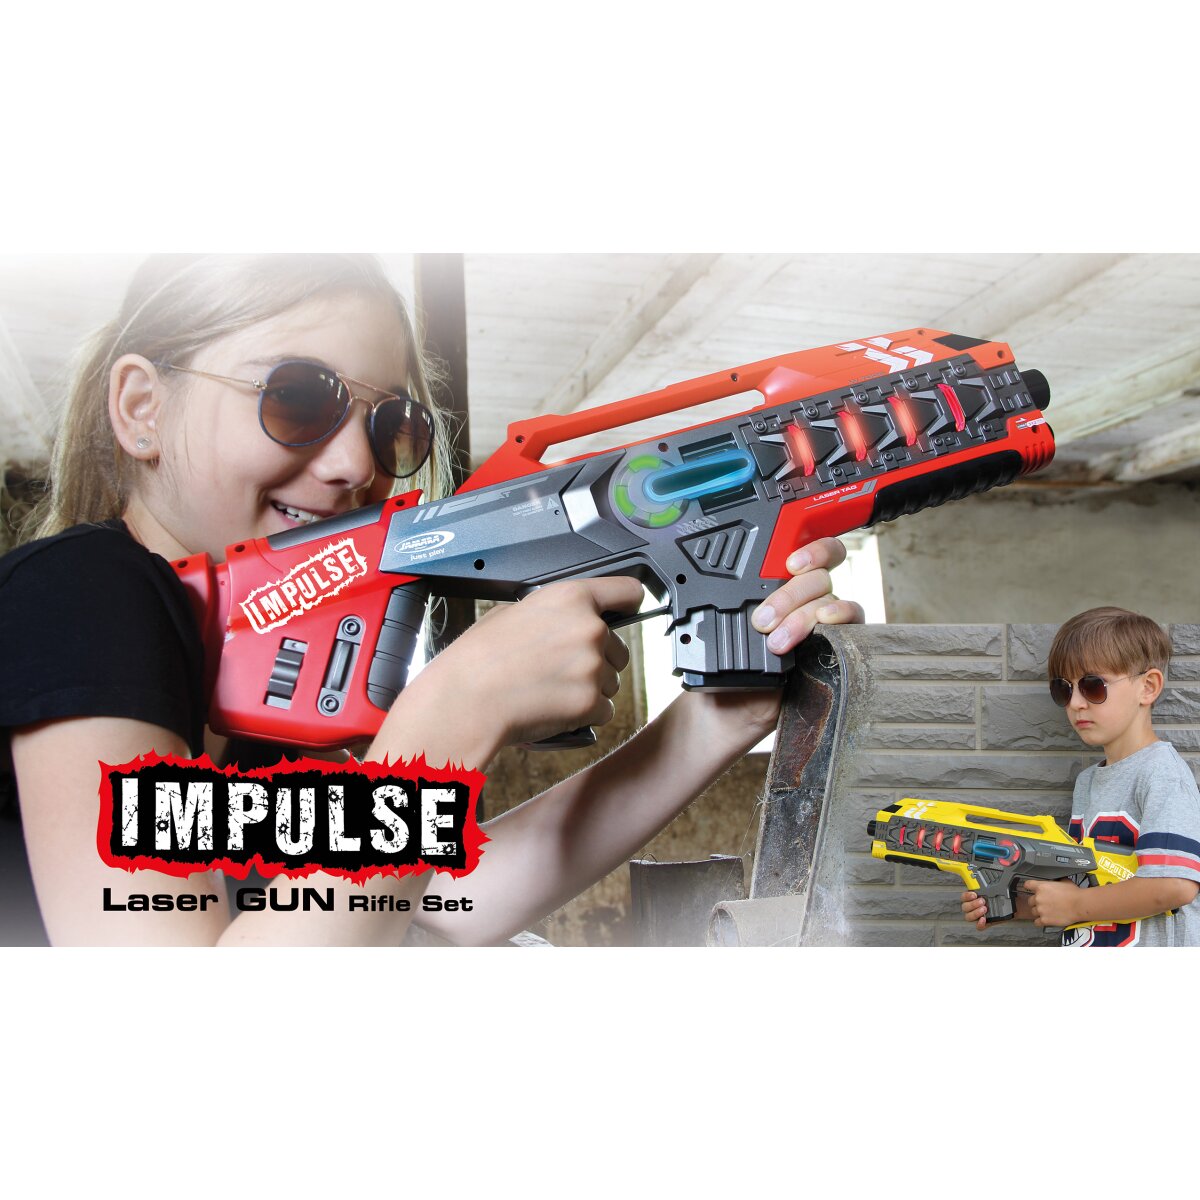 Impulse Laser Gun Rifle Set gelb/rot